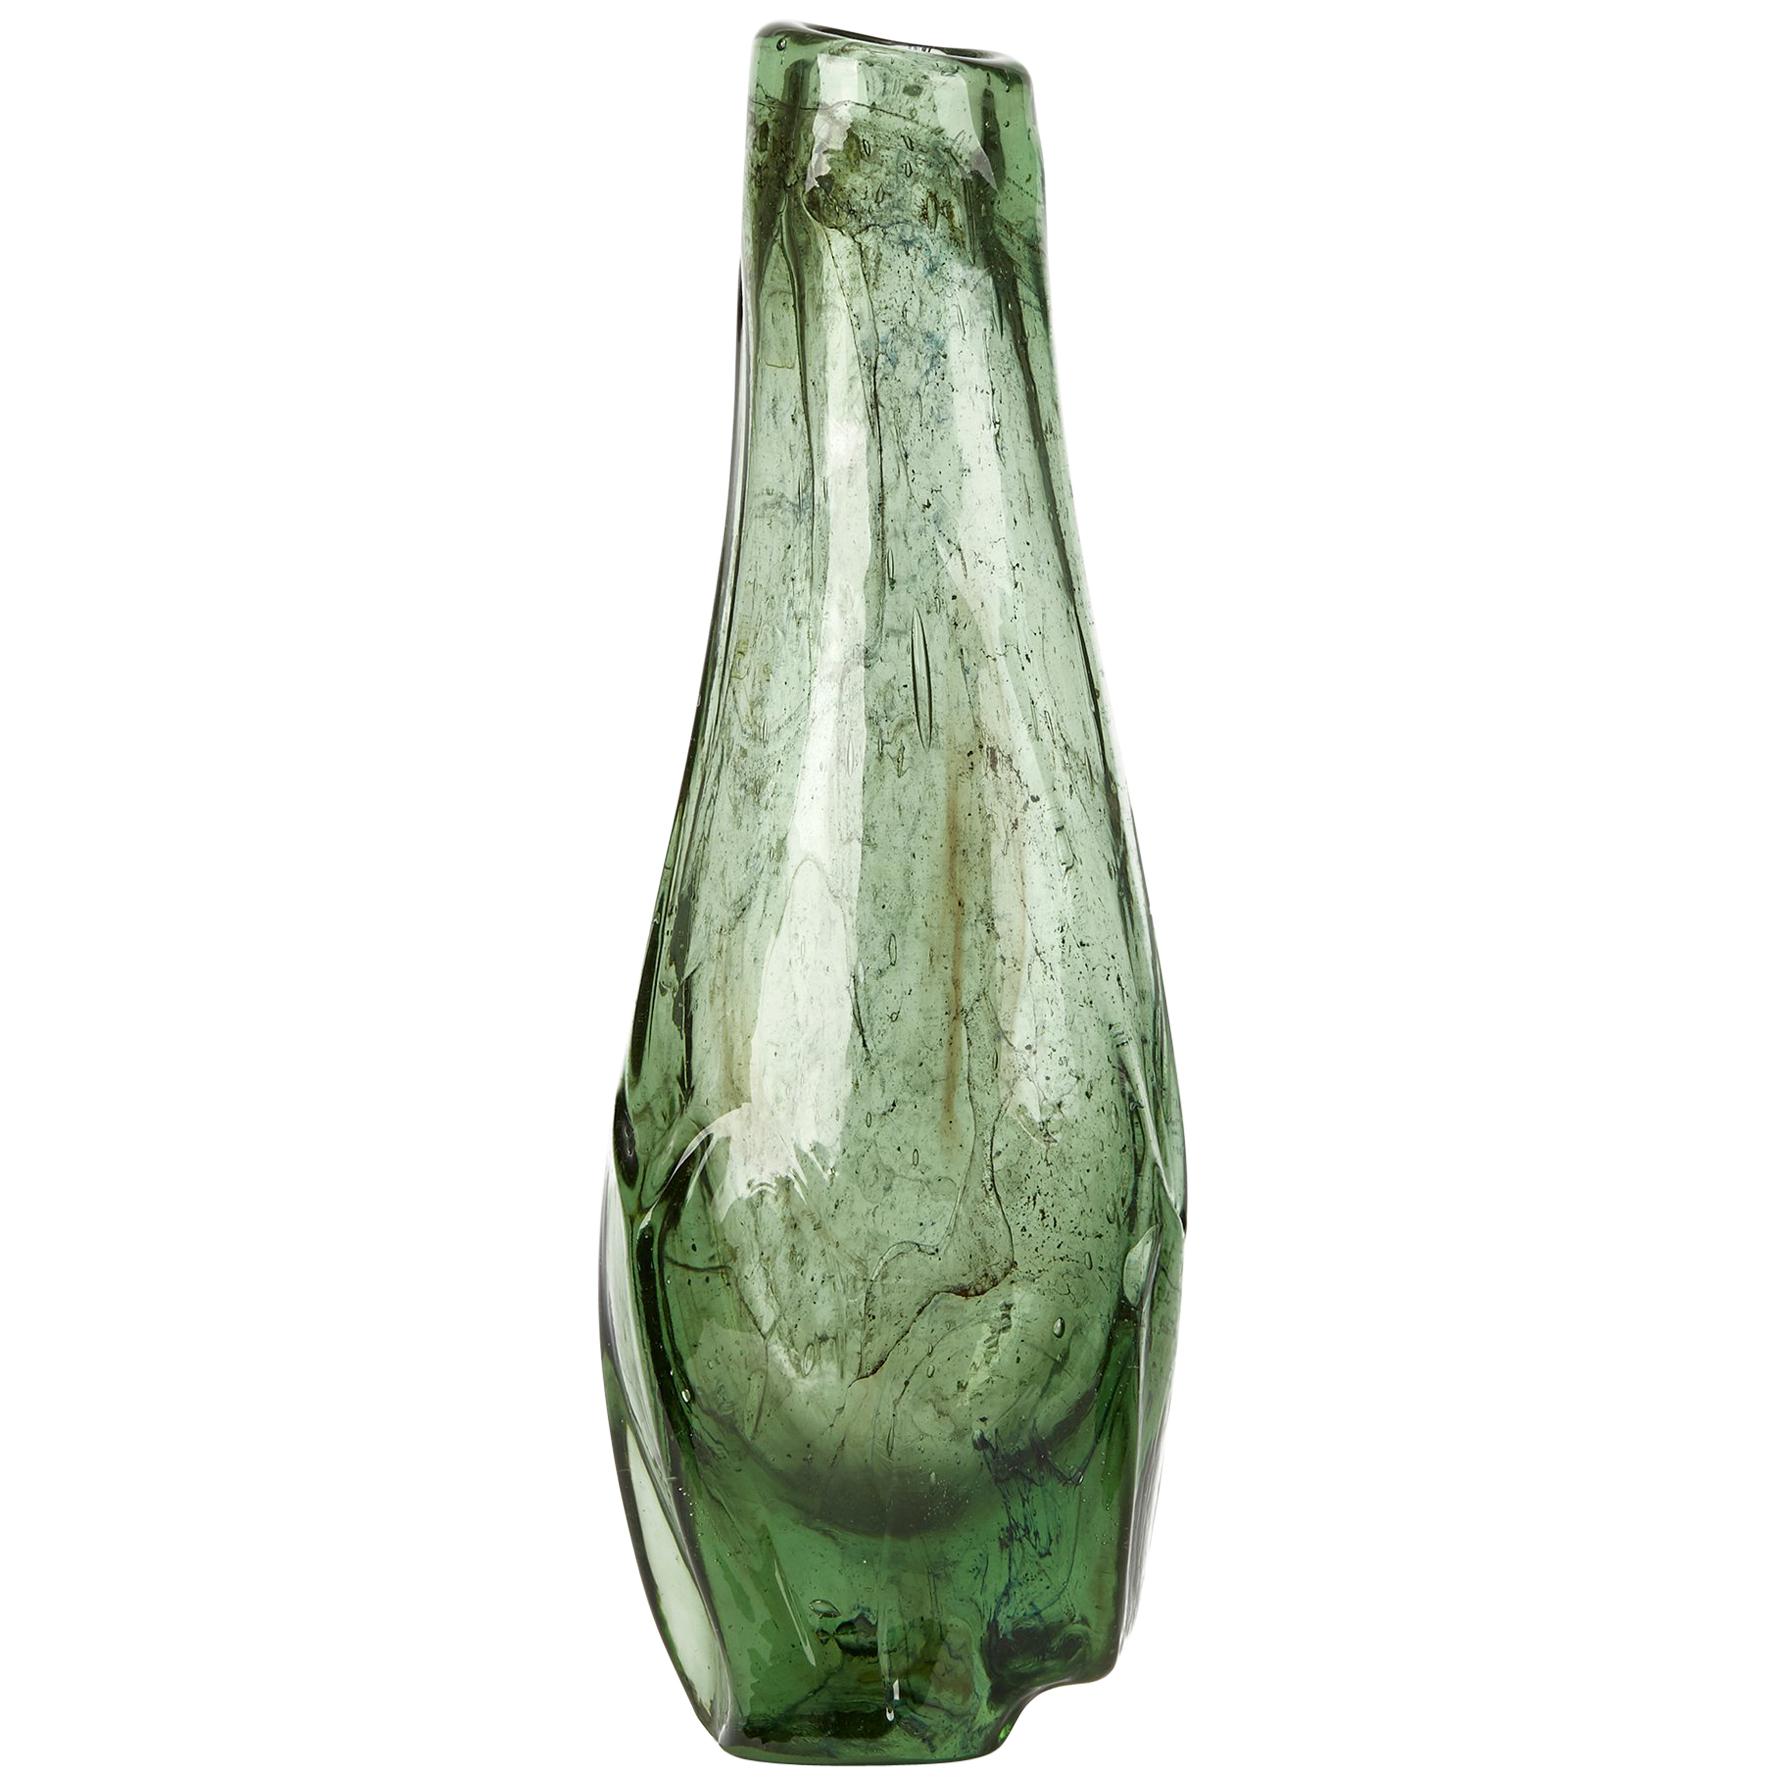 Vintage Marvin Lipofsky American Green Art Glass Vase, Dated 1963